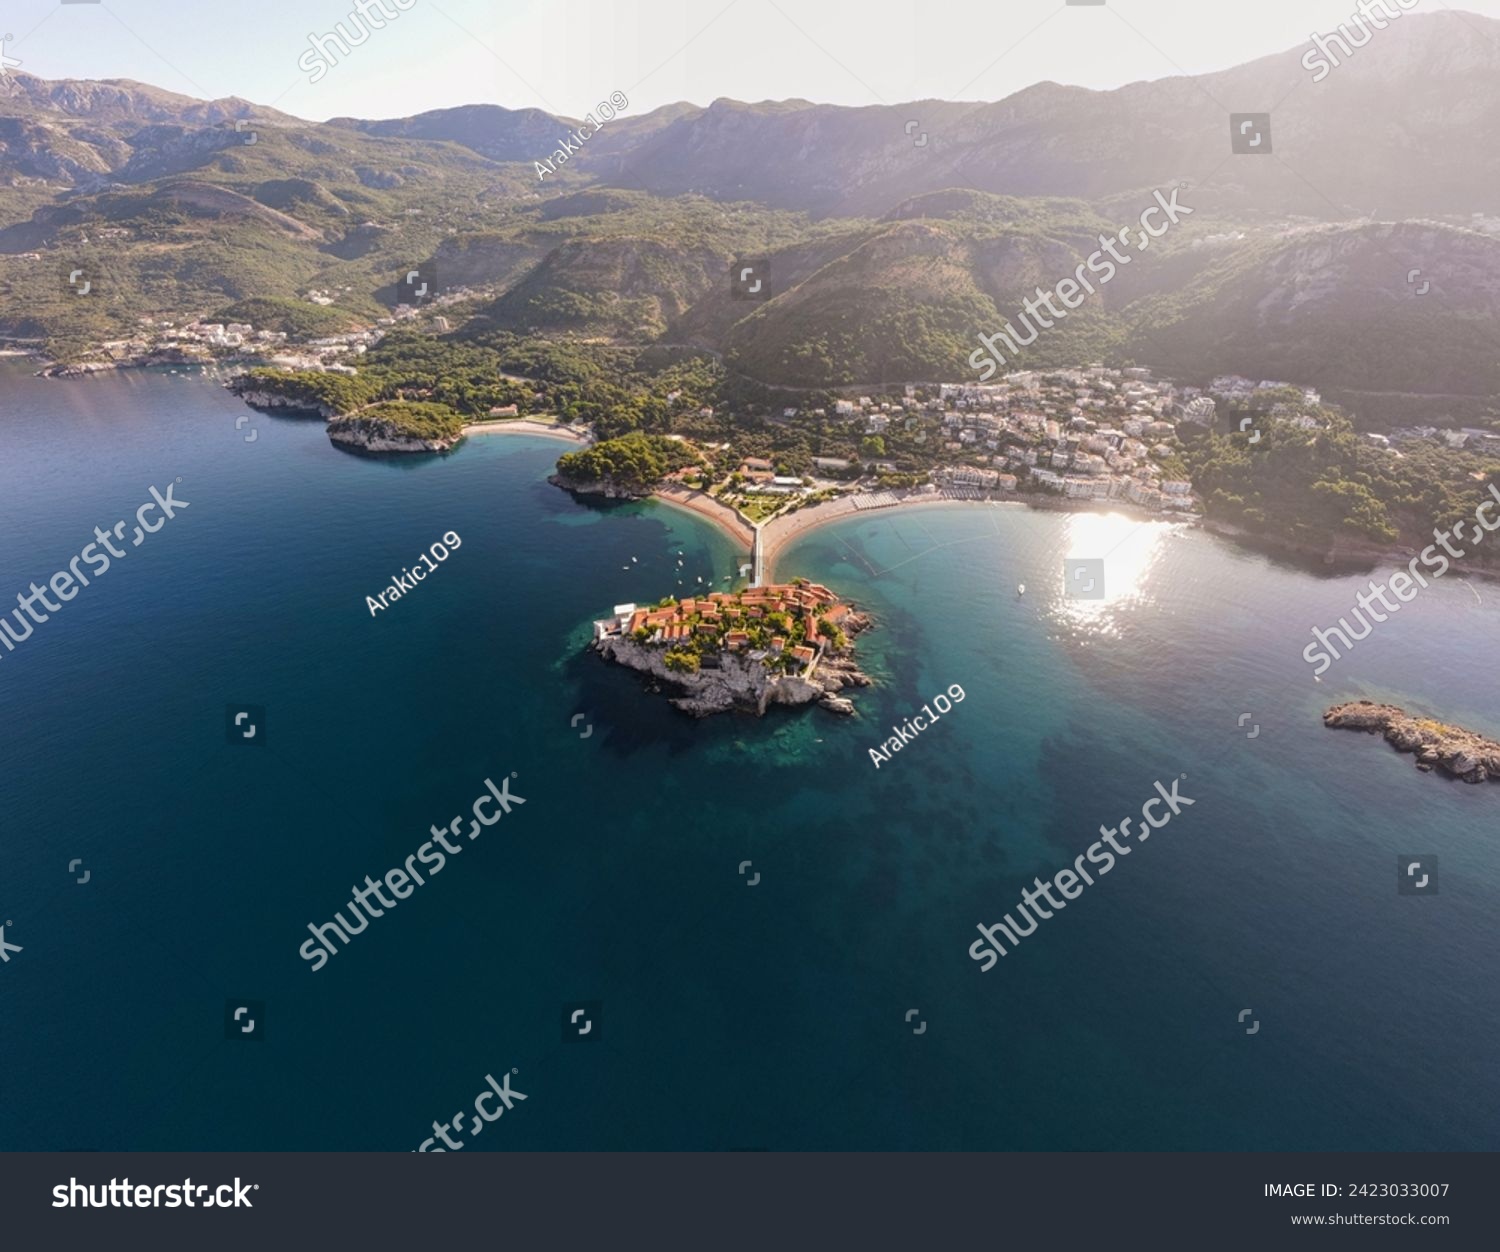 Beautiful shot drone above Sveti Stefan in Adriatic sea, Montenegro, Jadransko more, Crna Gora, Aerial #2423033007